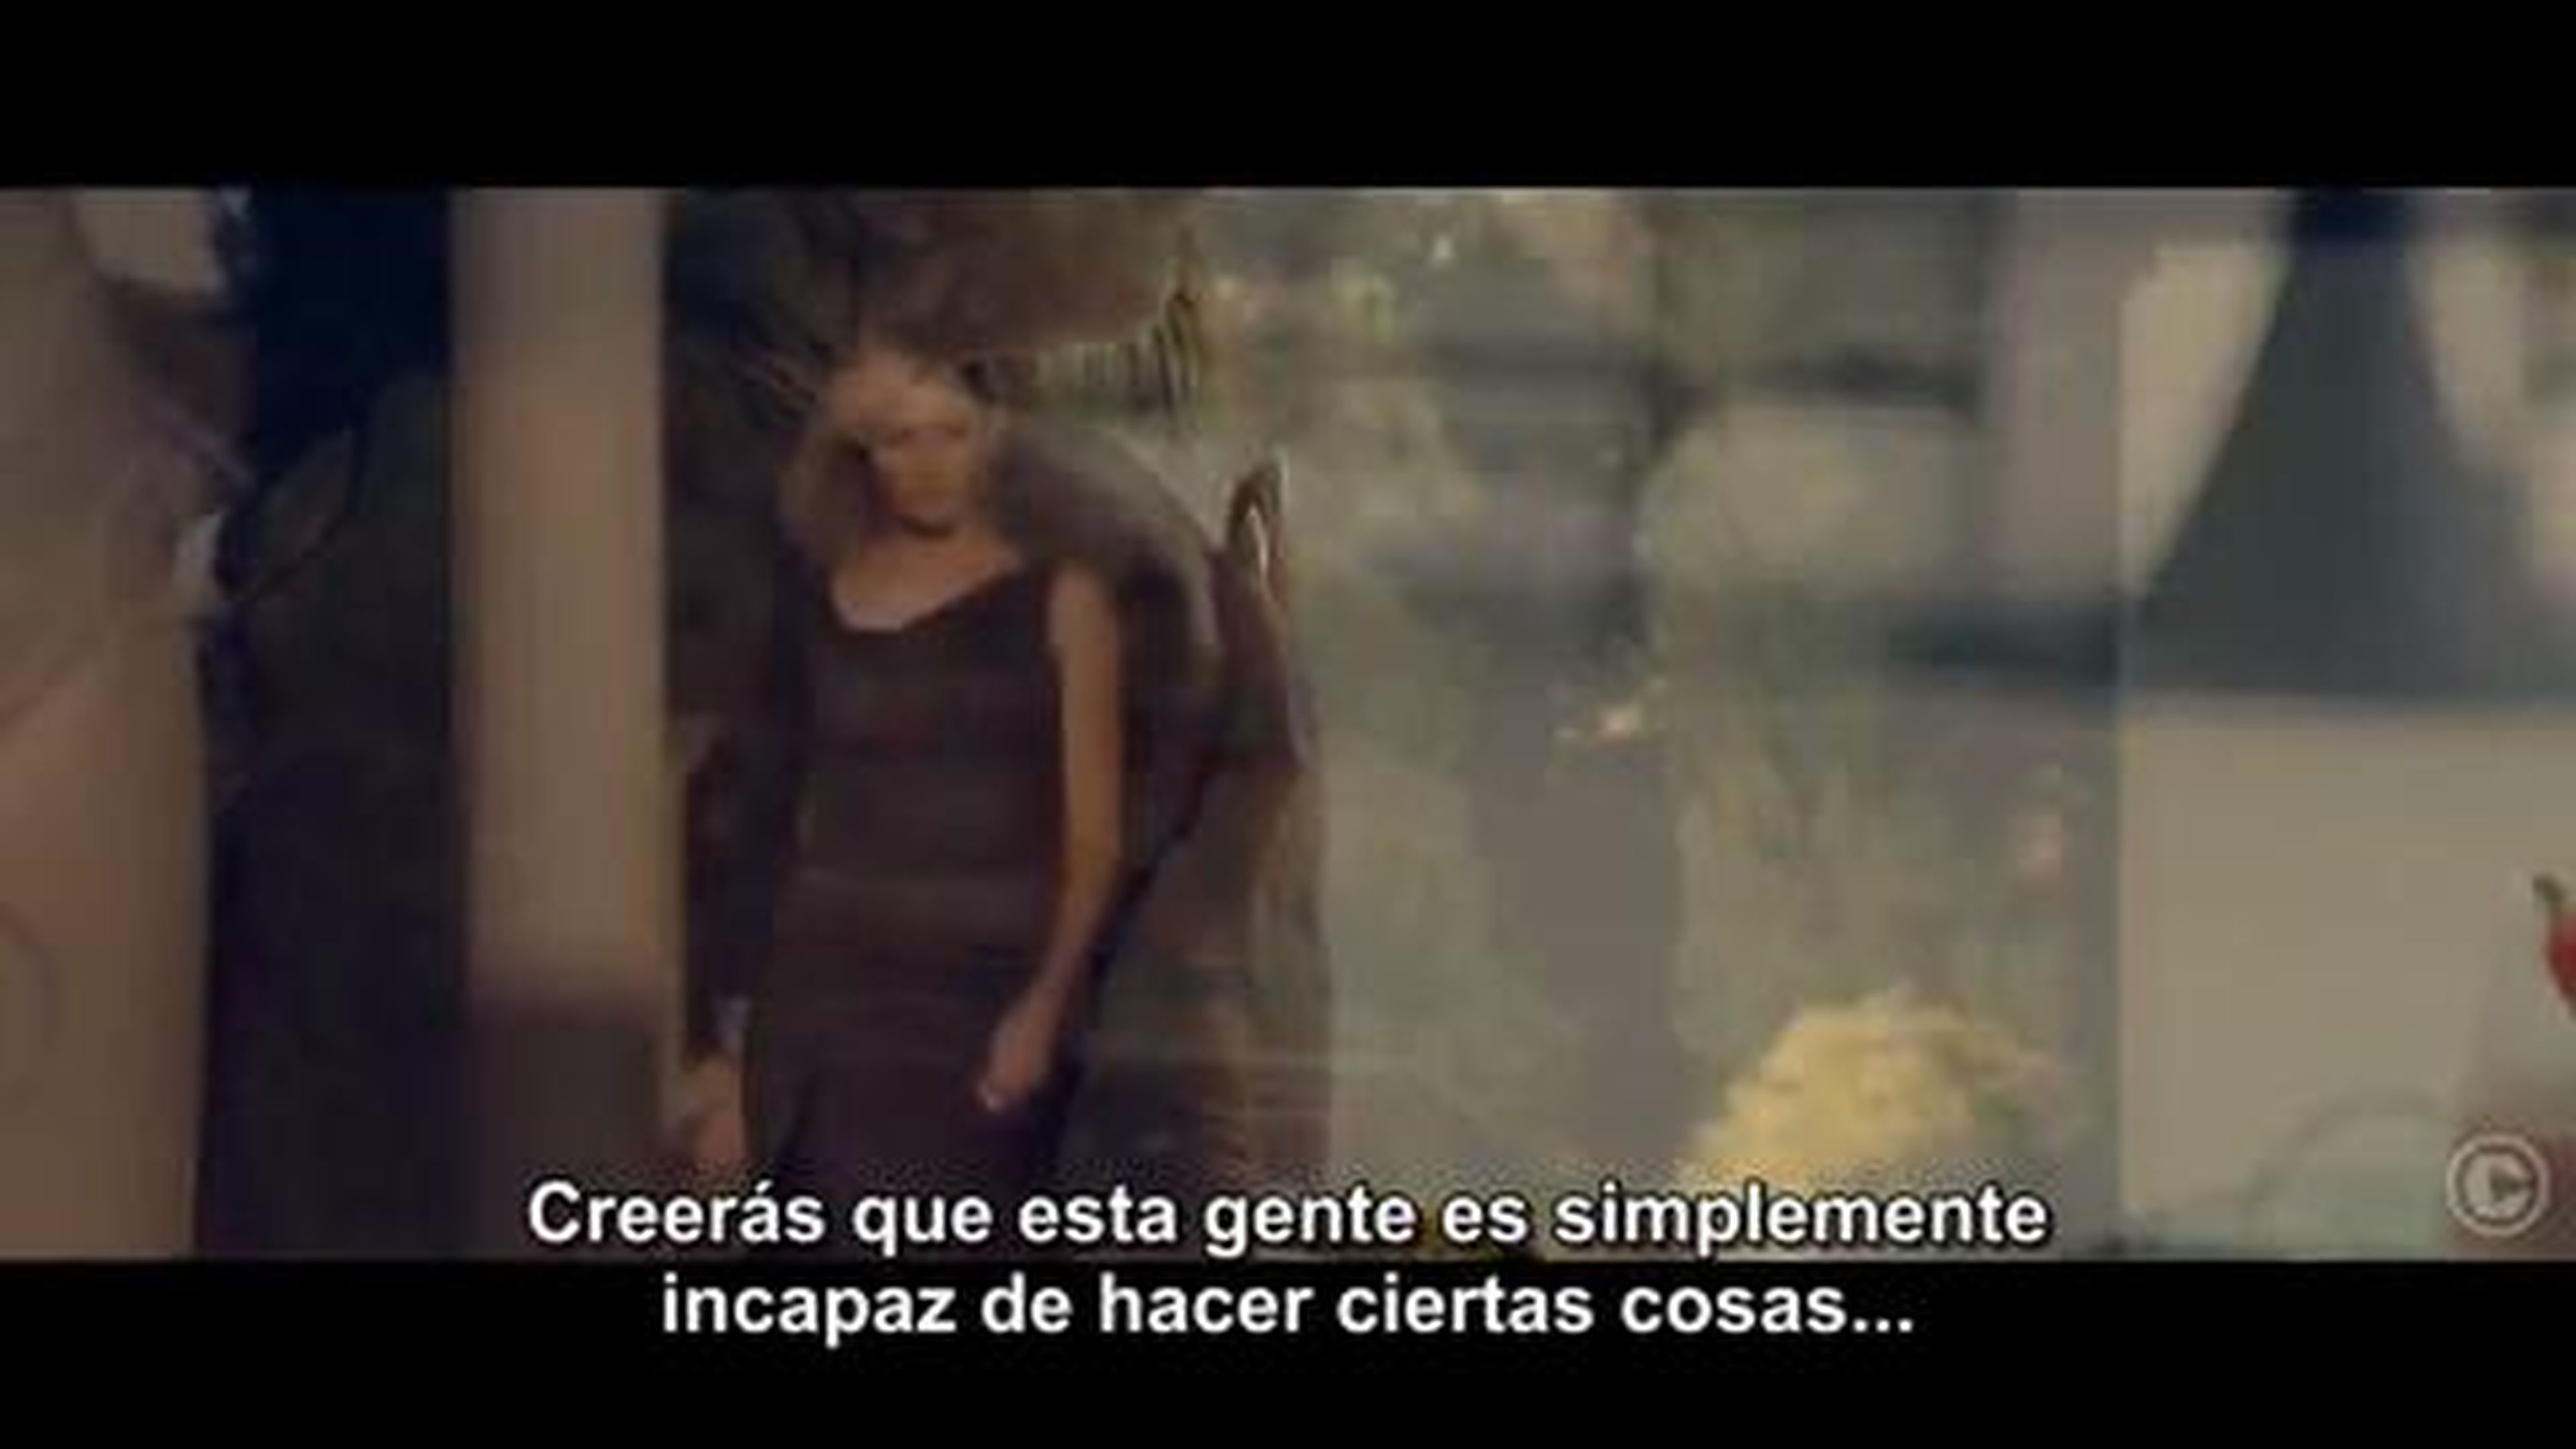 The Counselor (El consejero)-Trailer Subtitulado en Español (HD) Brad Pitt,Penelope cruz